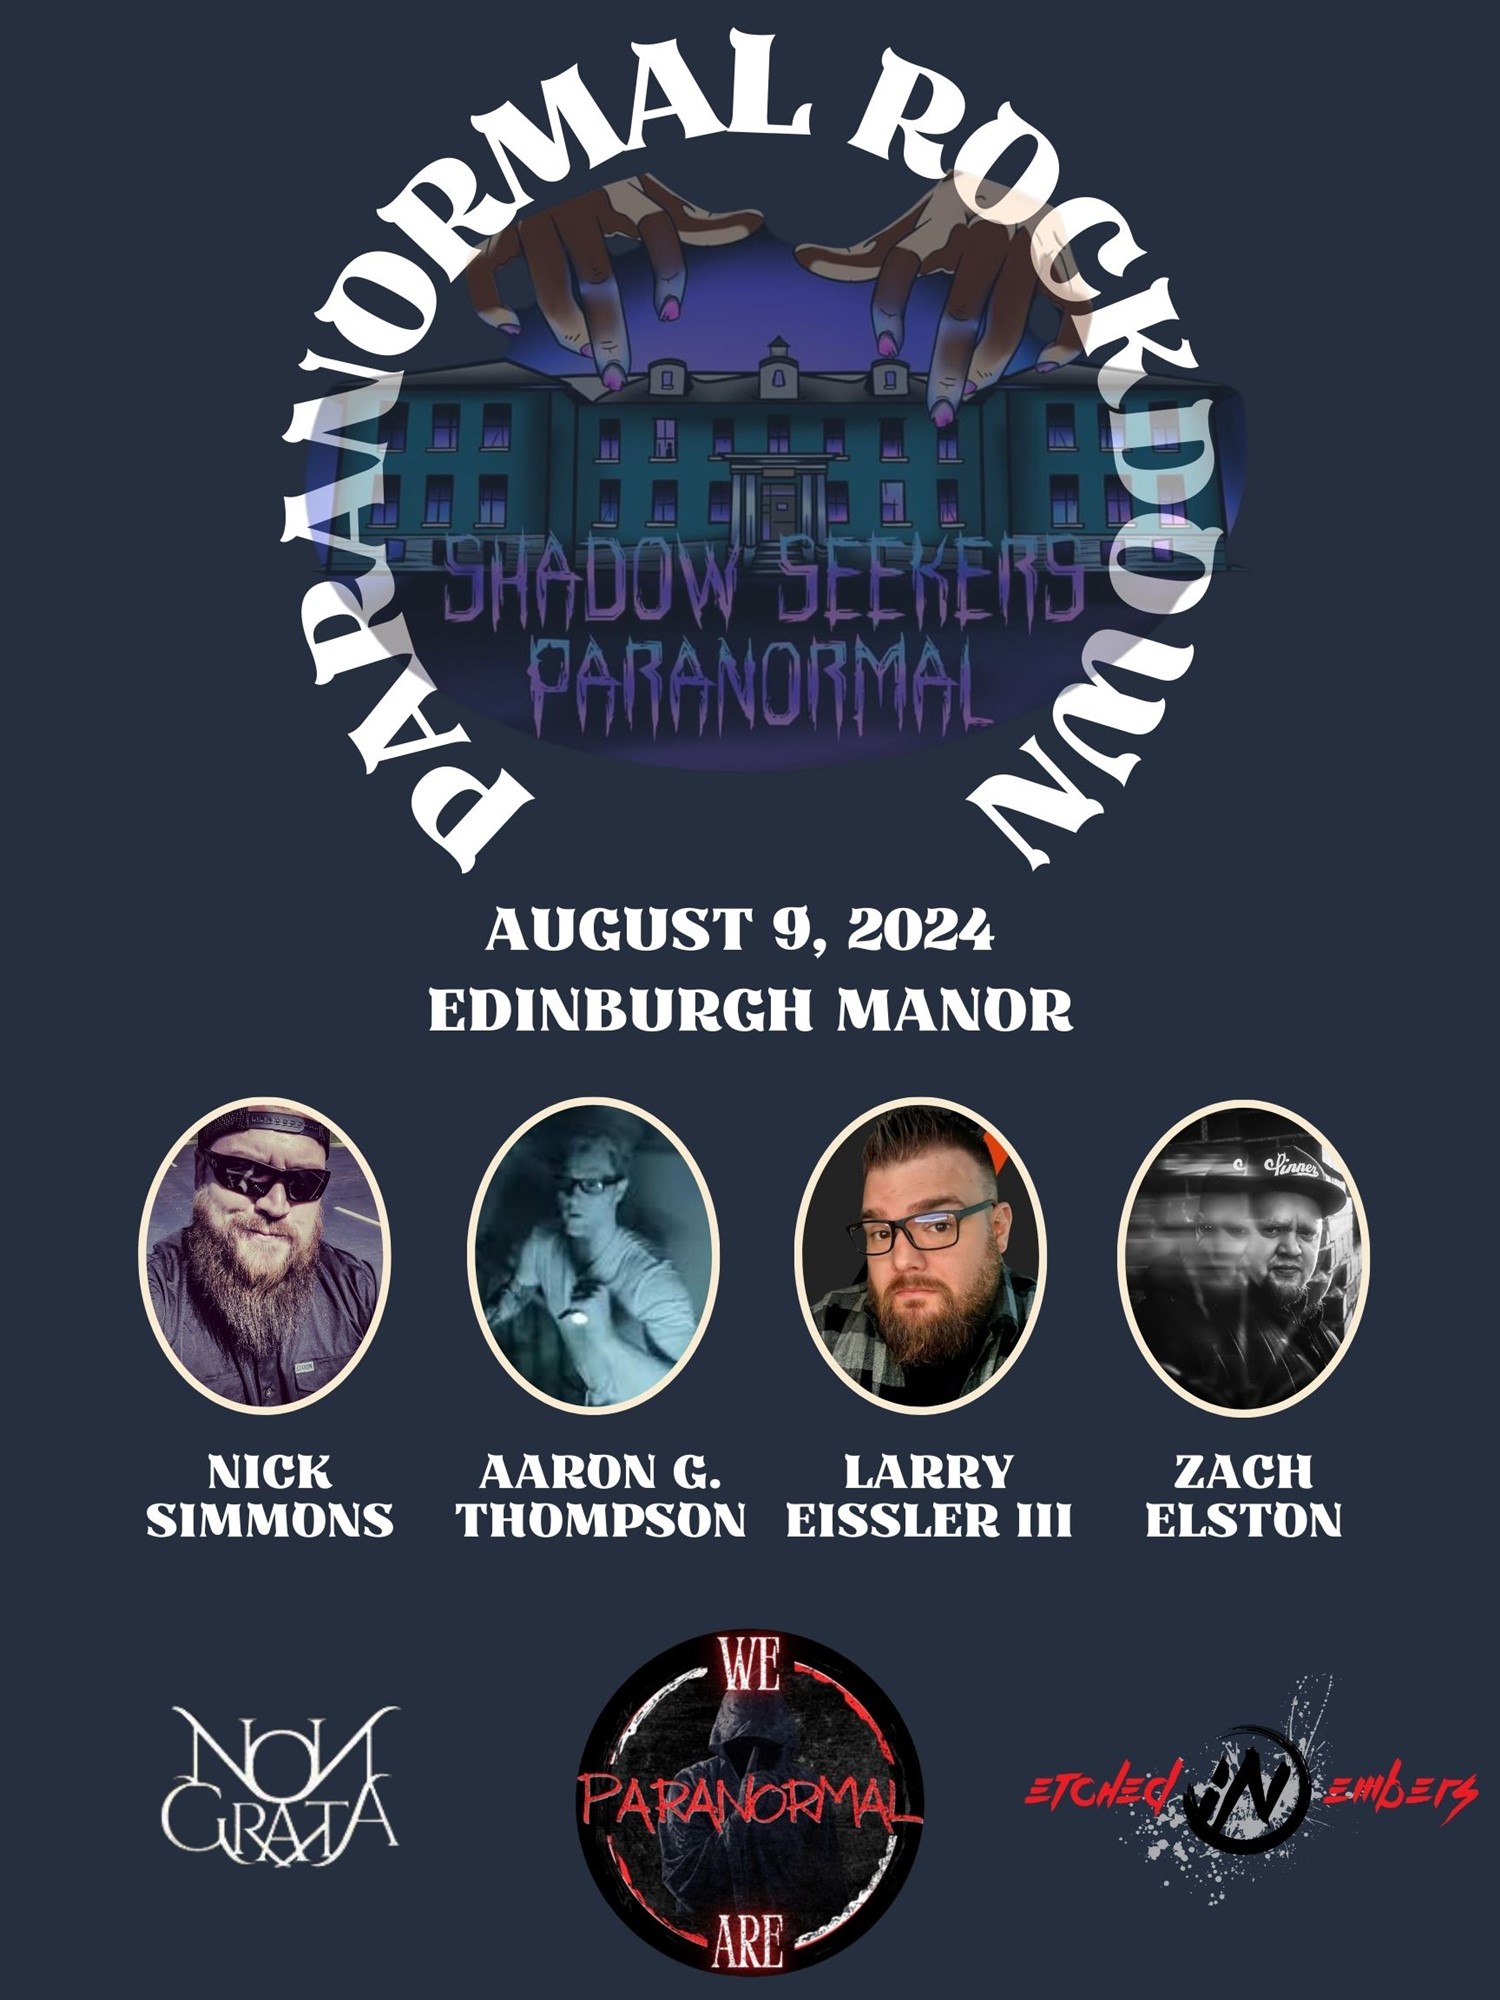 PARANORMAL ROCKDOWN EDINBURGH MANOR on Aug 09, 16:00@EDINBURGH MANOR - Buy tickets and Get information on Shadow seekers paranormal 